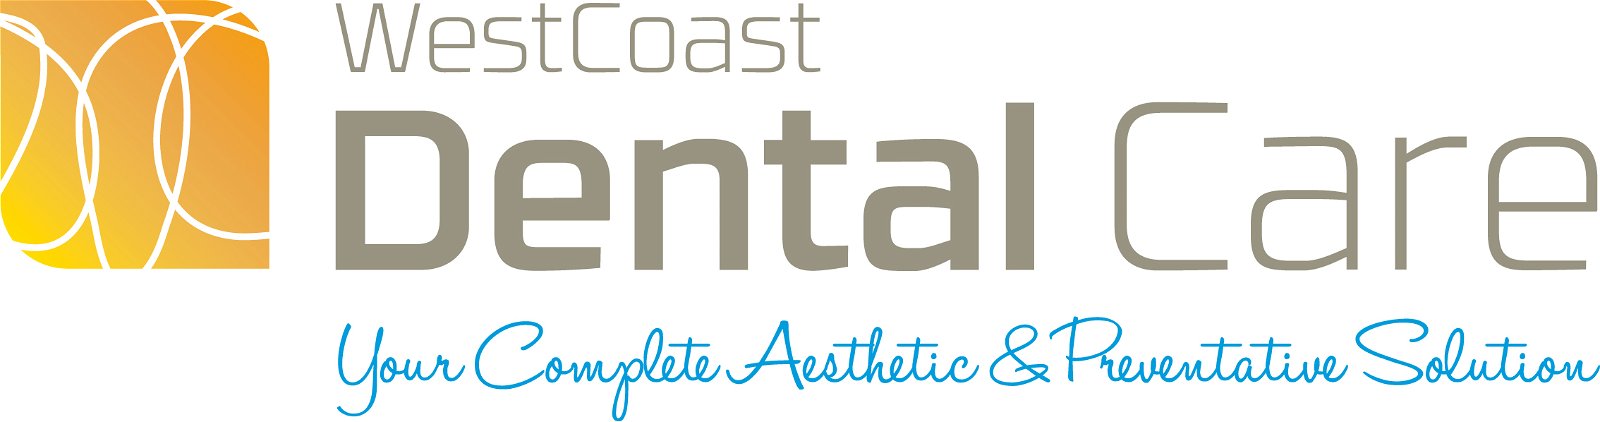 West Coast Dental Care - thumb 0